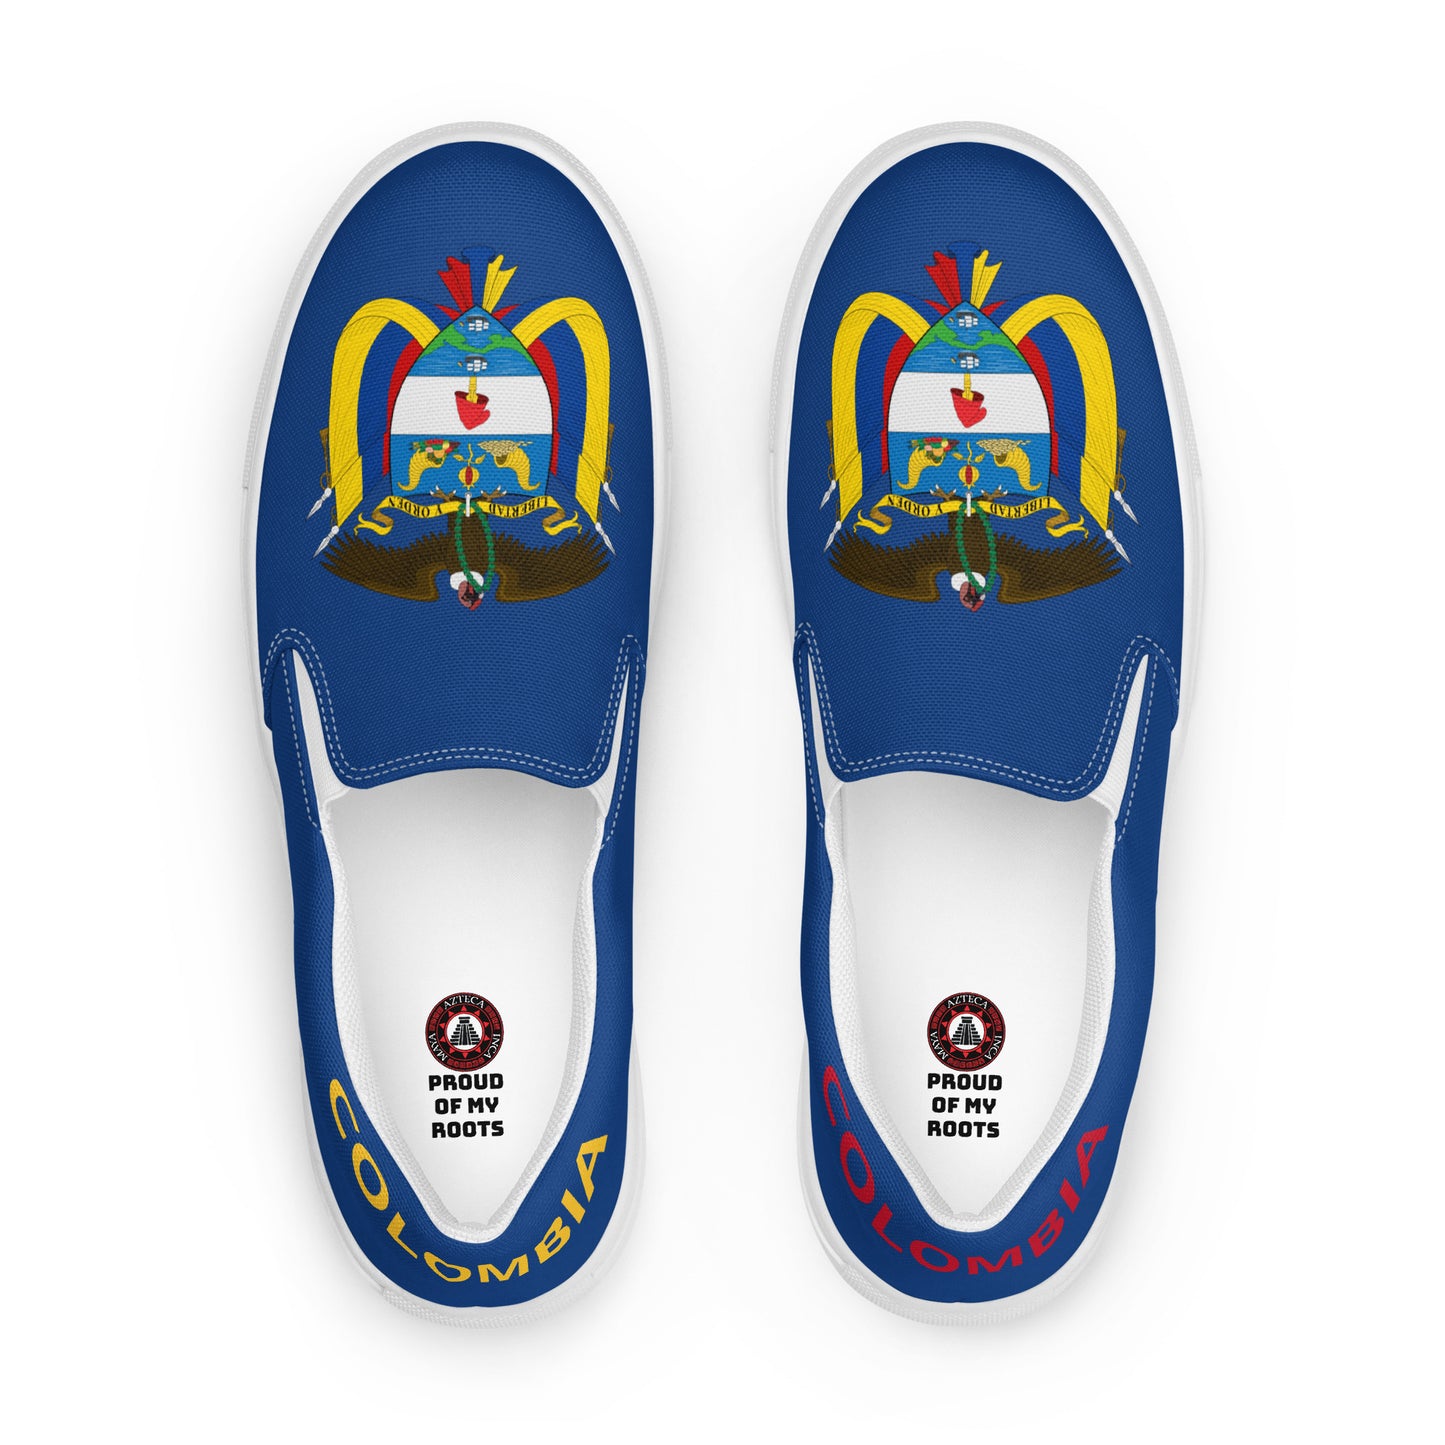 Colombia - Women - Blue - Slip-on shoes